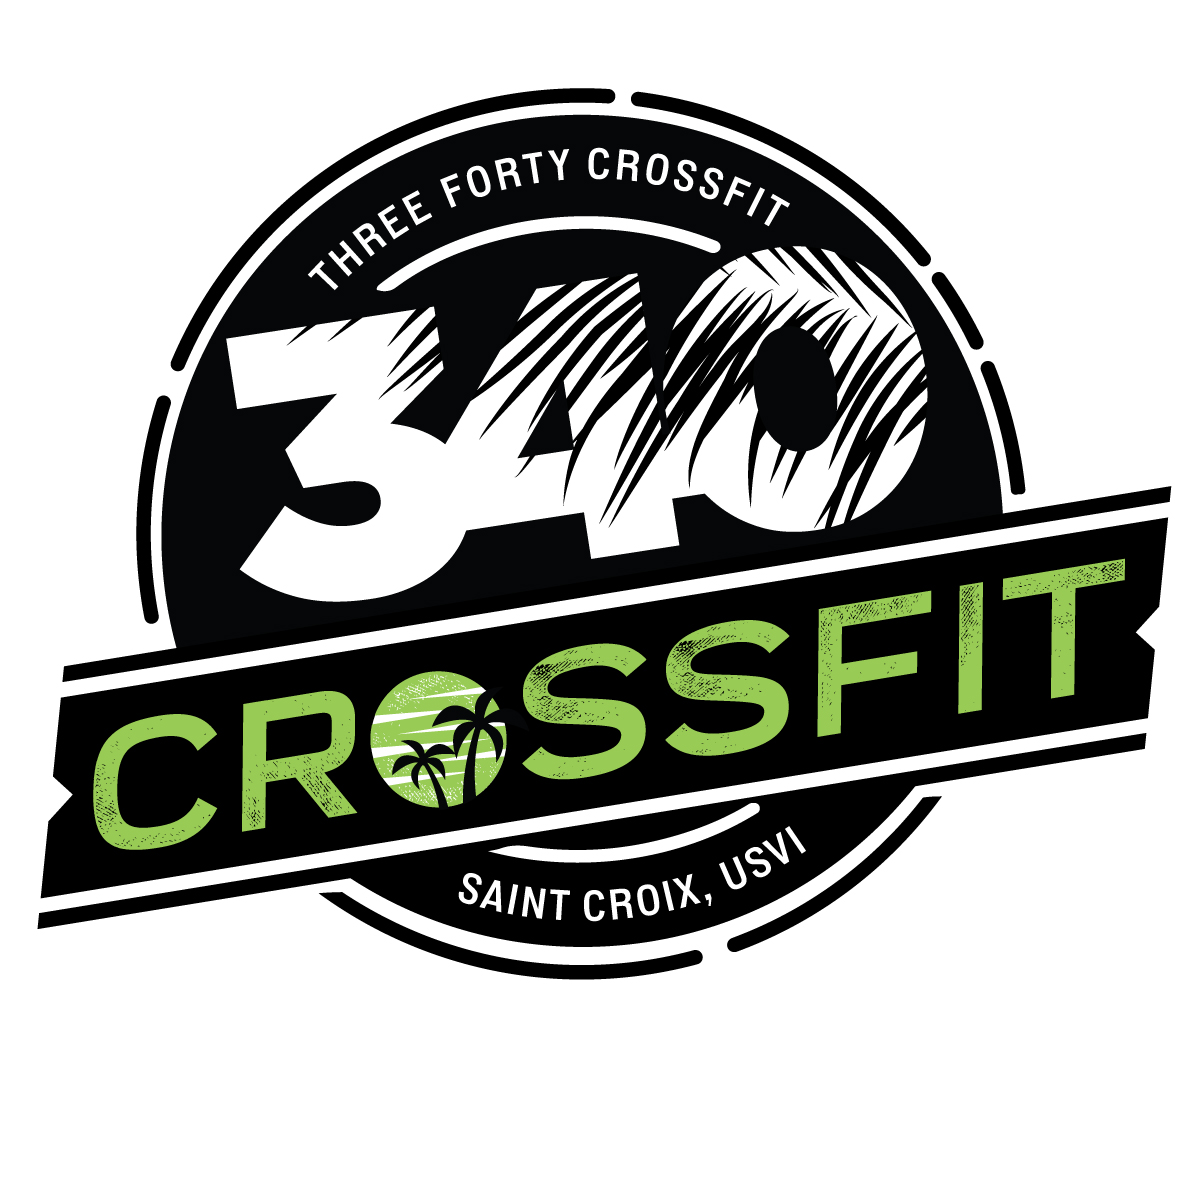 340 CrossFit